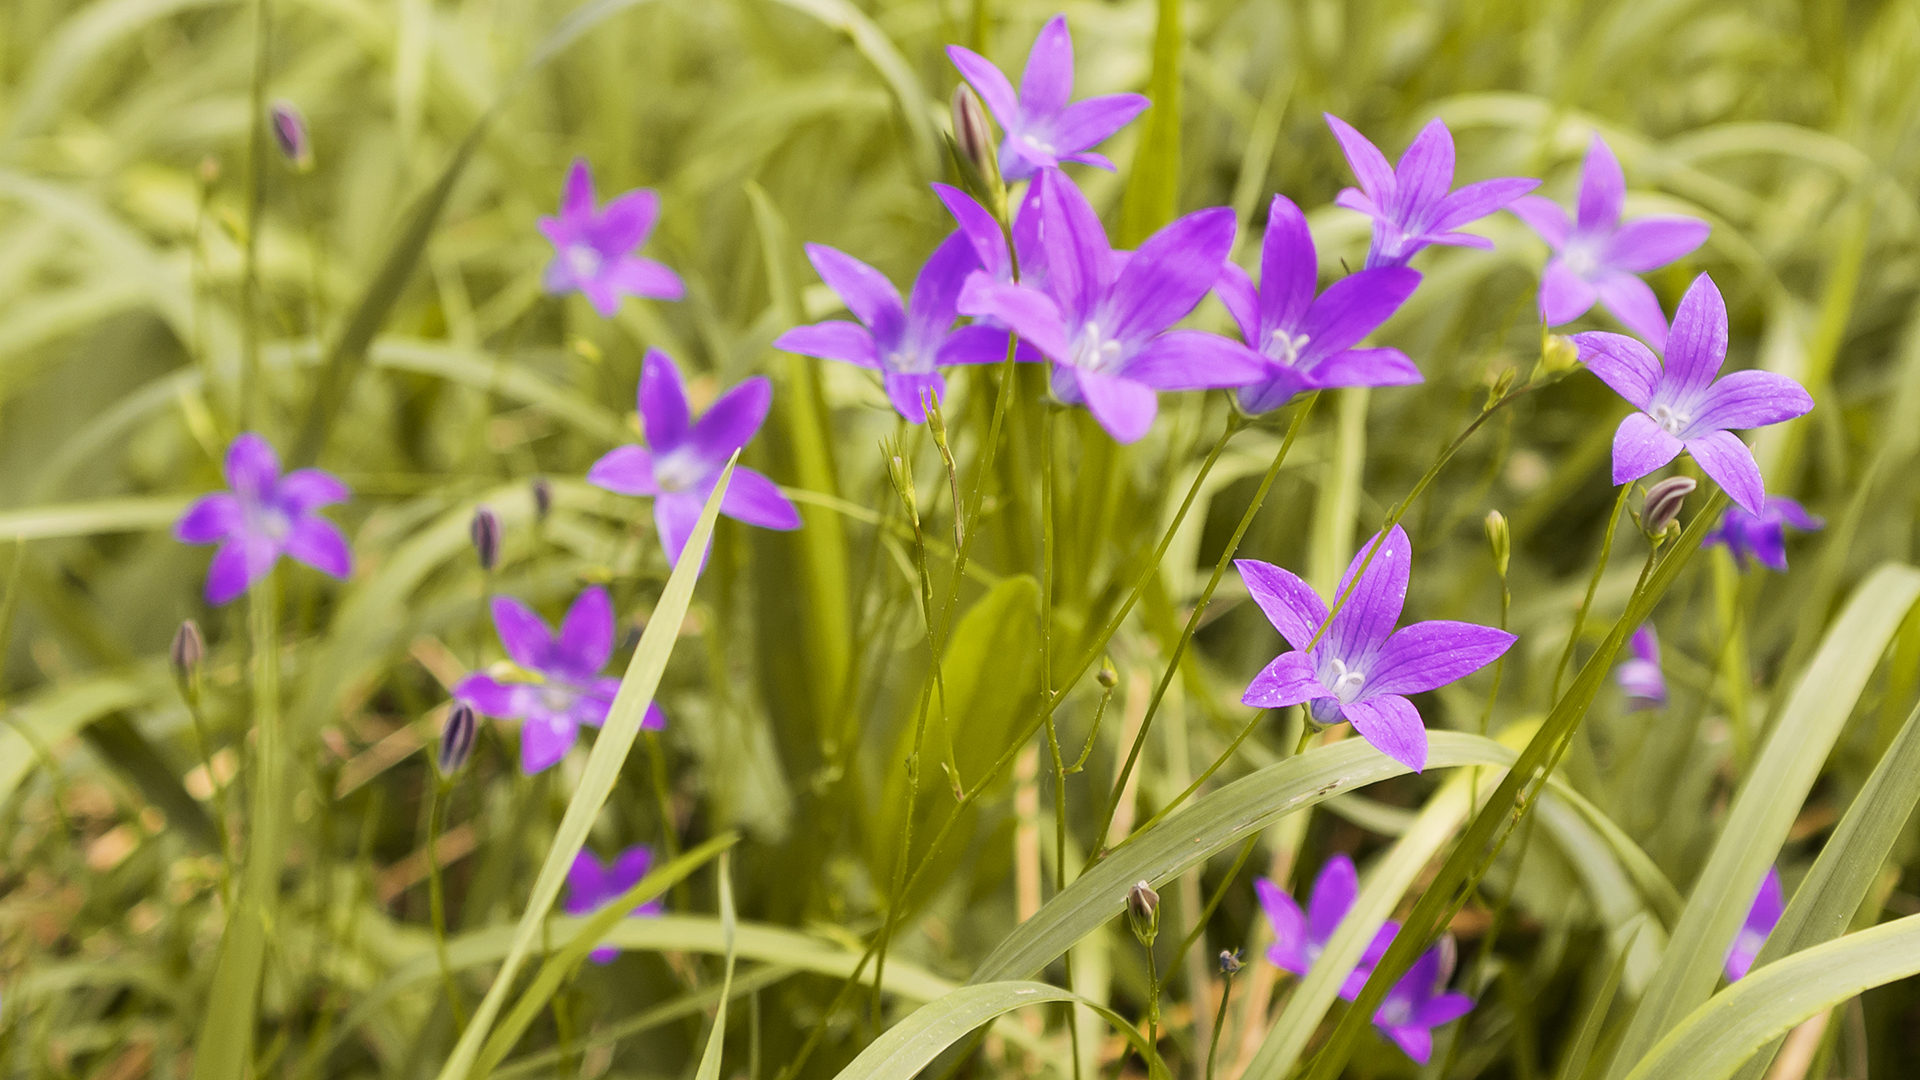 General 1920x1080 grass flowers purple